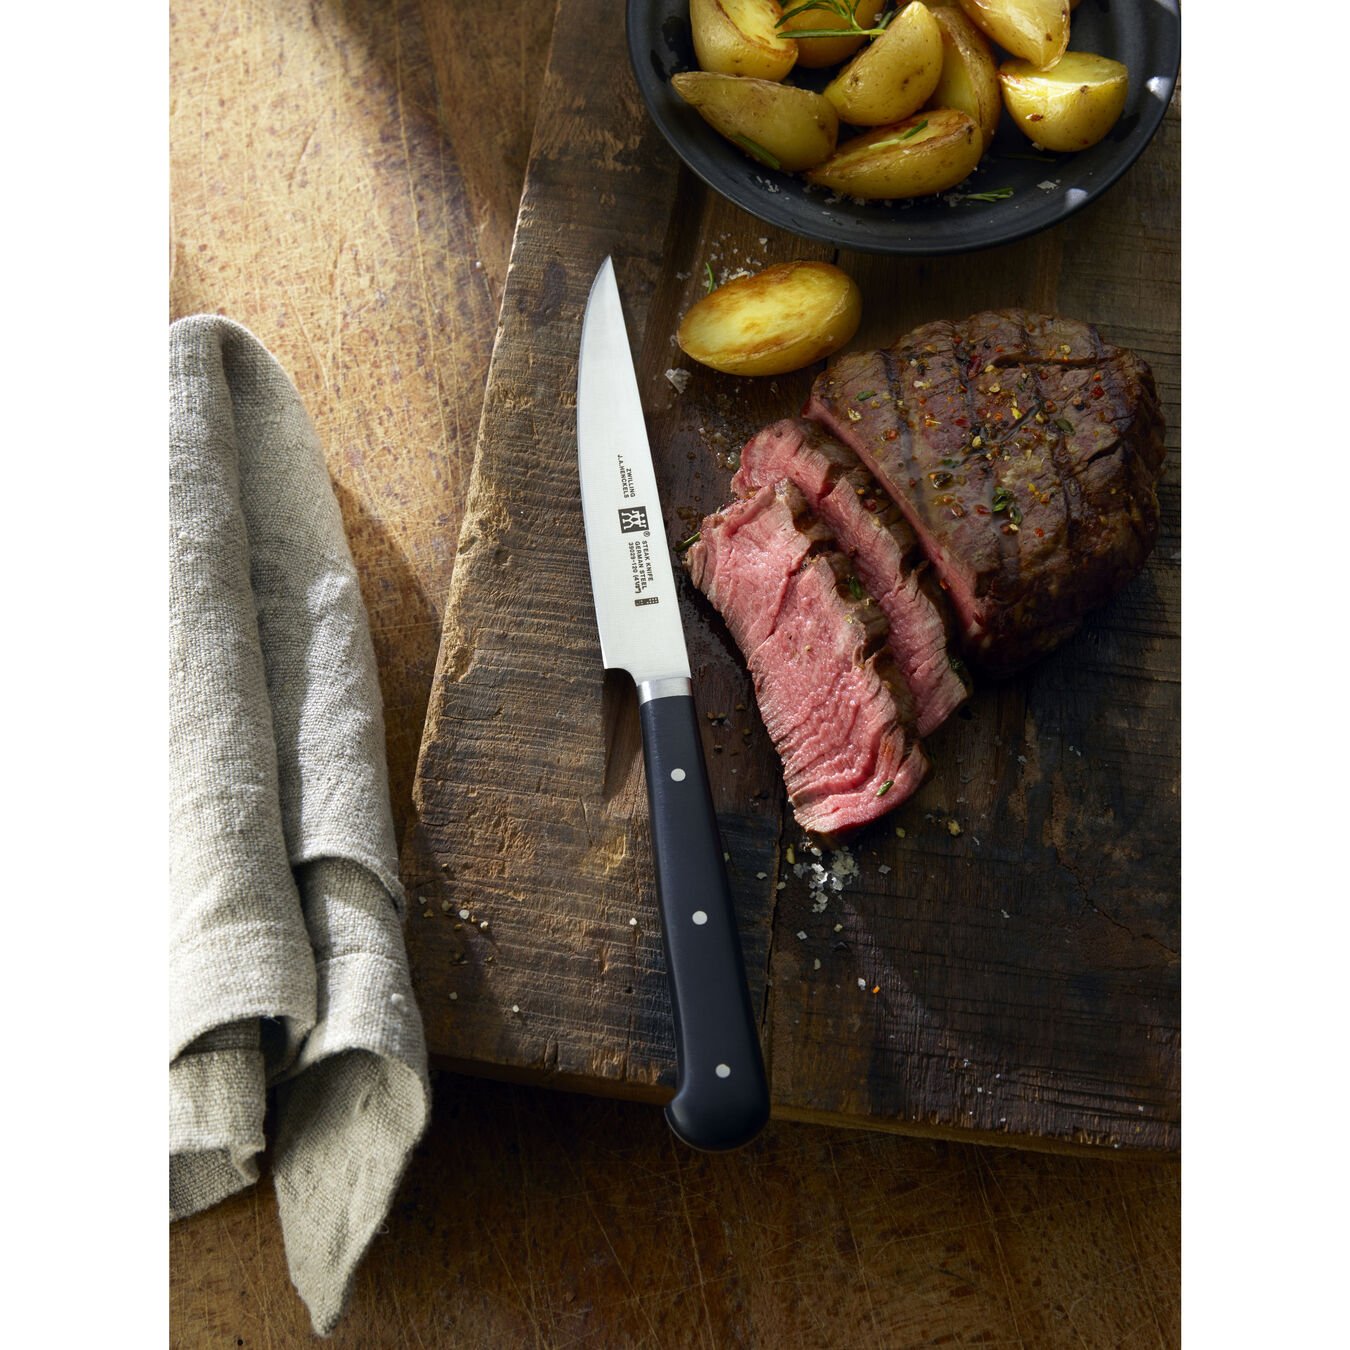 ZWILLING Pro S 4-Piece Steak Knife Set